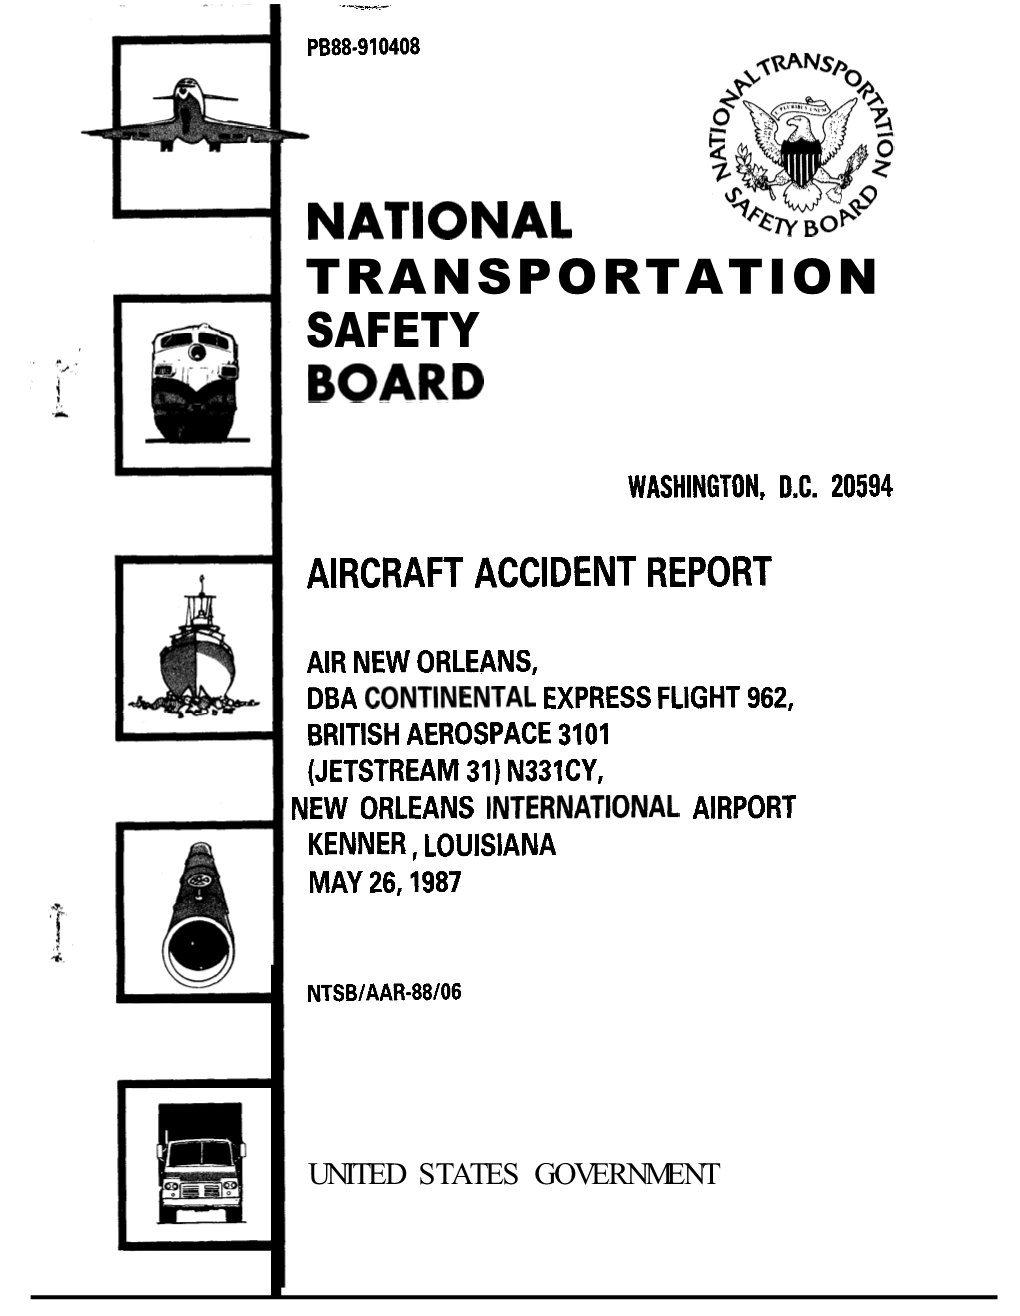 Jetstream 31) N331cy, New Orleans International Airport Kenner , Louisiana May 26,1987